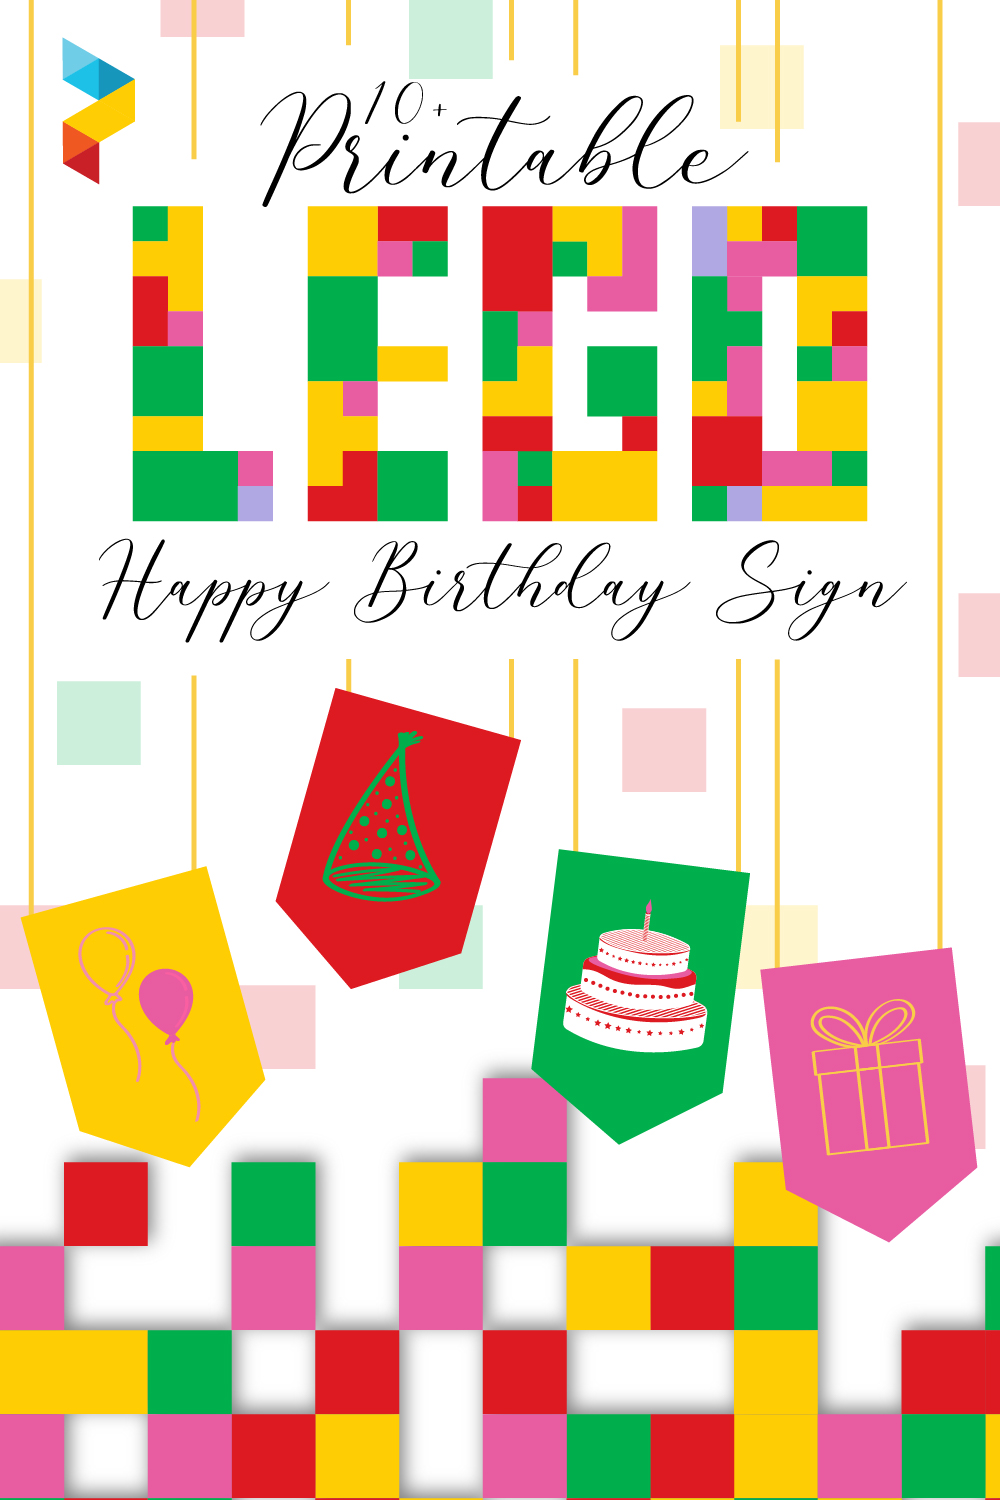 LEGO Happy Birthday Sign